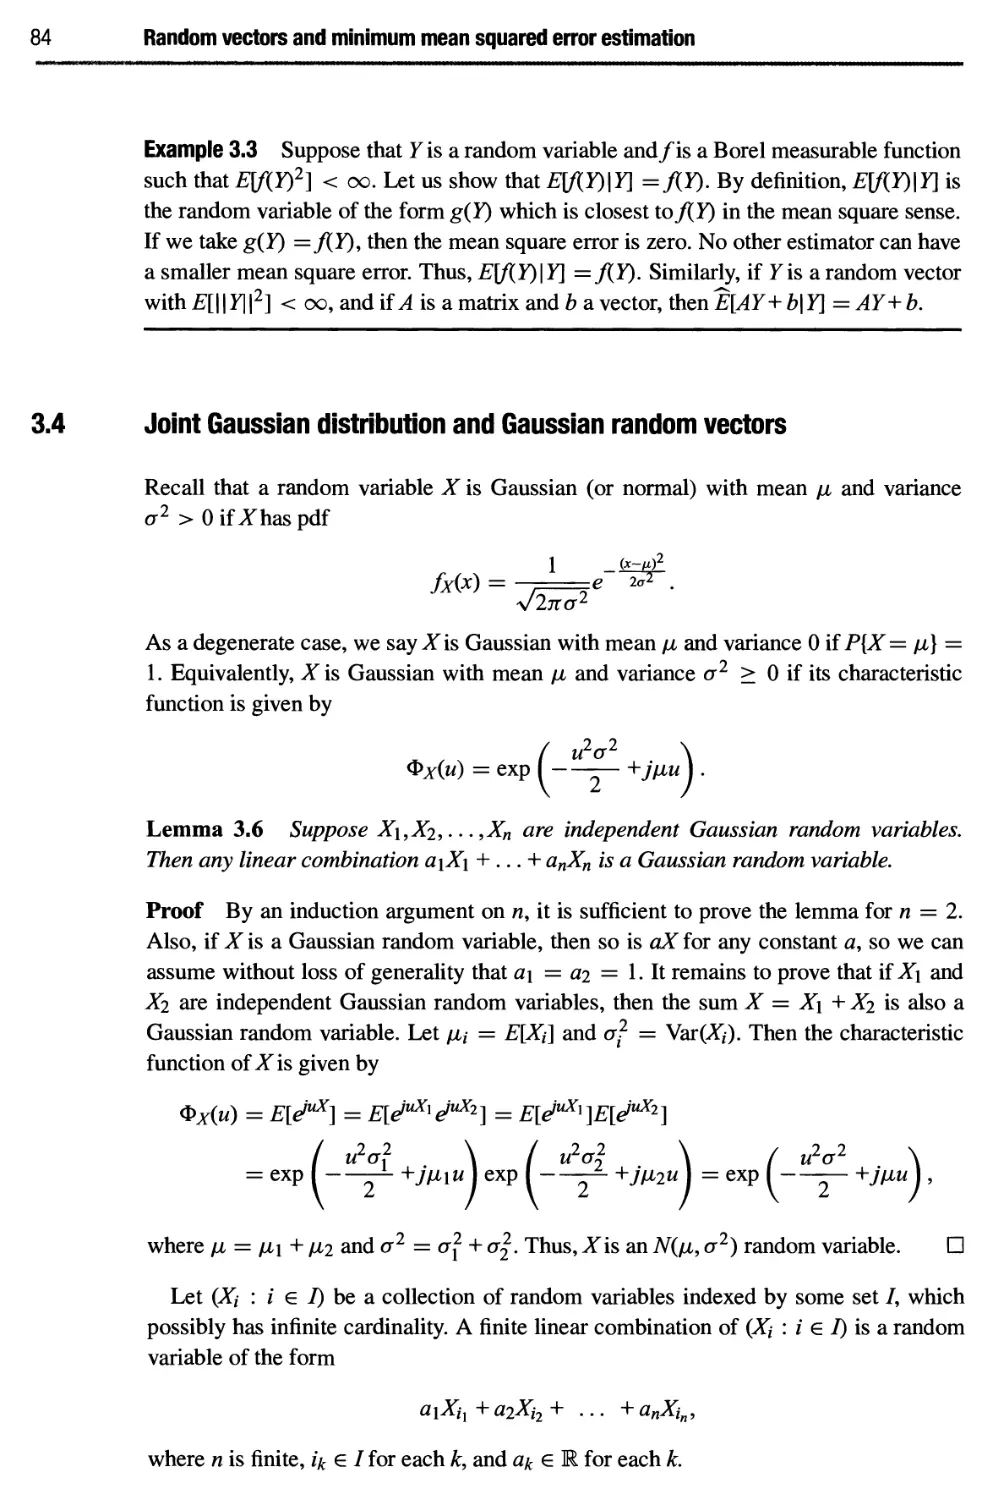 3.4 Joint Gaussian distribution and Gaussian random vectors 84